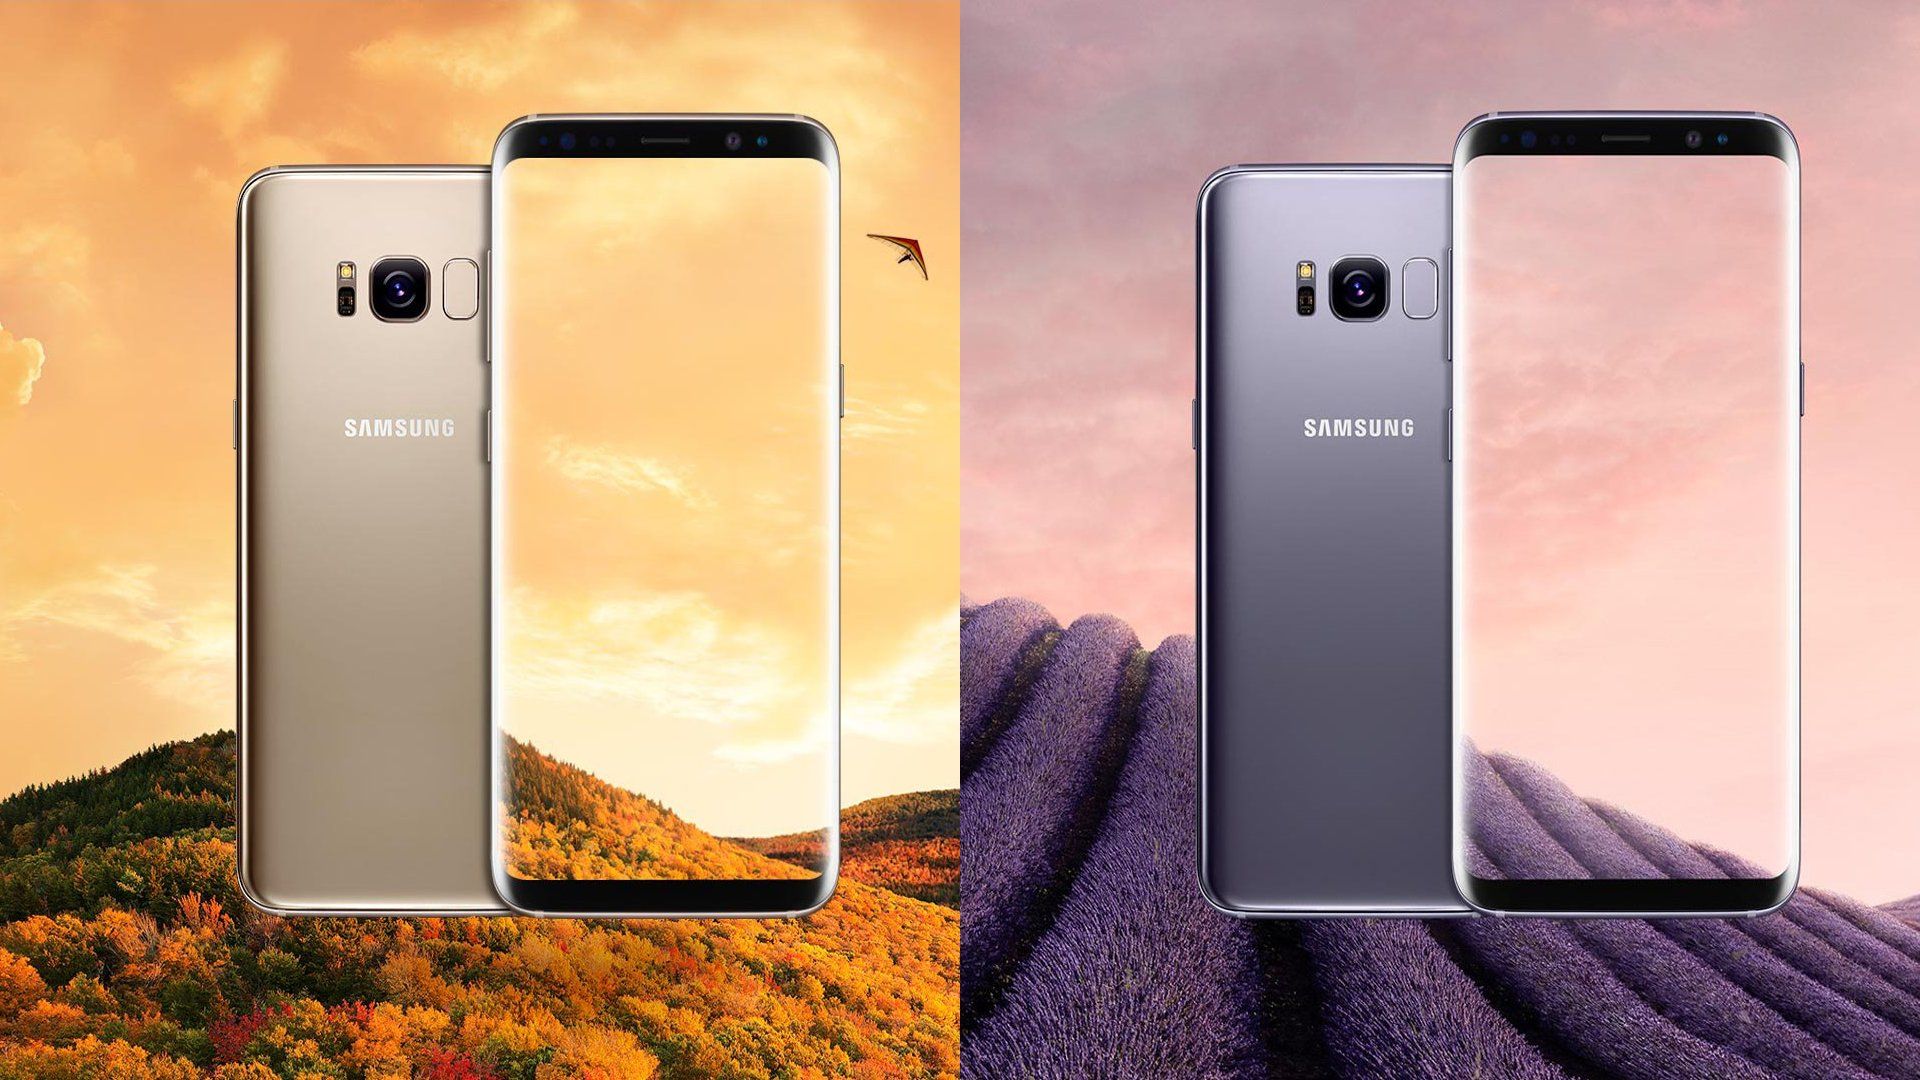 Samsung galaxy s9 серый. Samsung Galaxy s8. Самсунг галакси с 8. Samsung Galaxy s8 2017. Samsung Galaxy s8 Plus Gold.